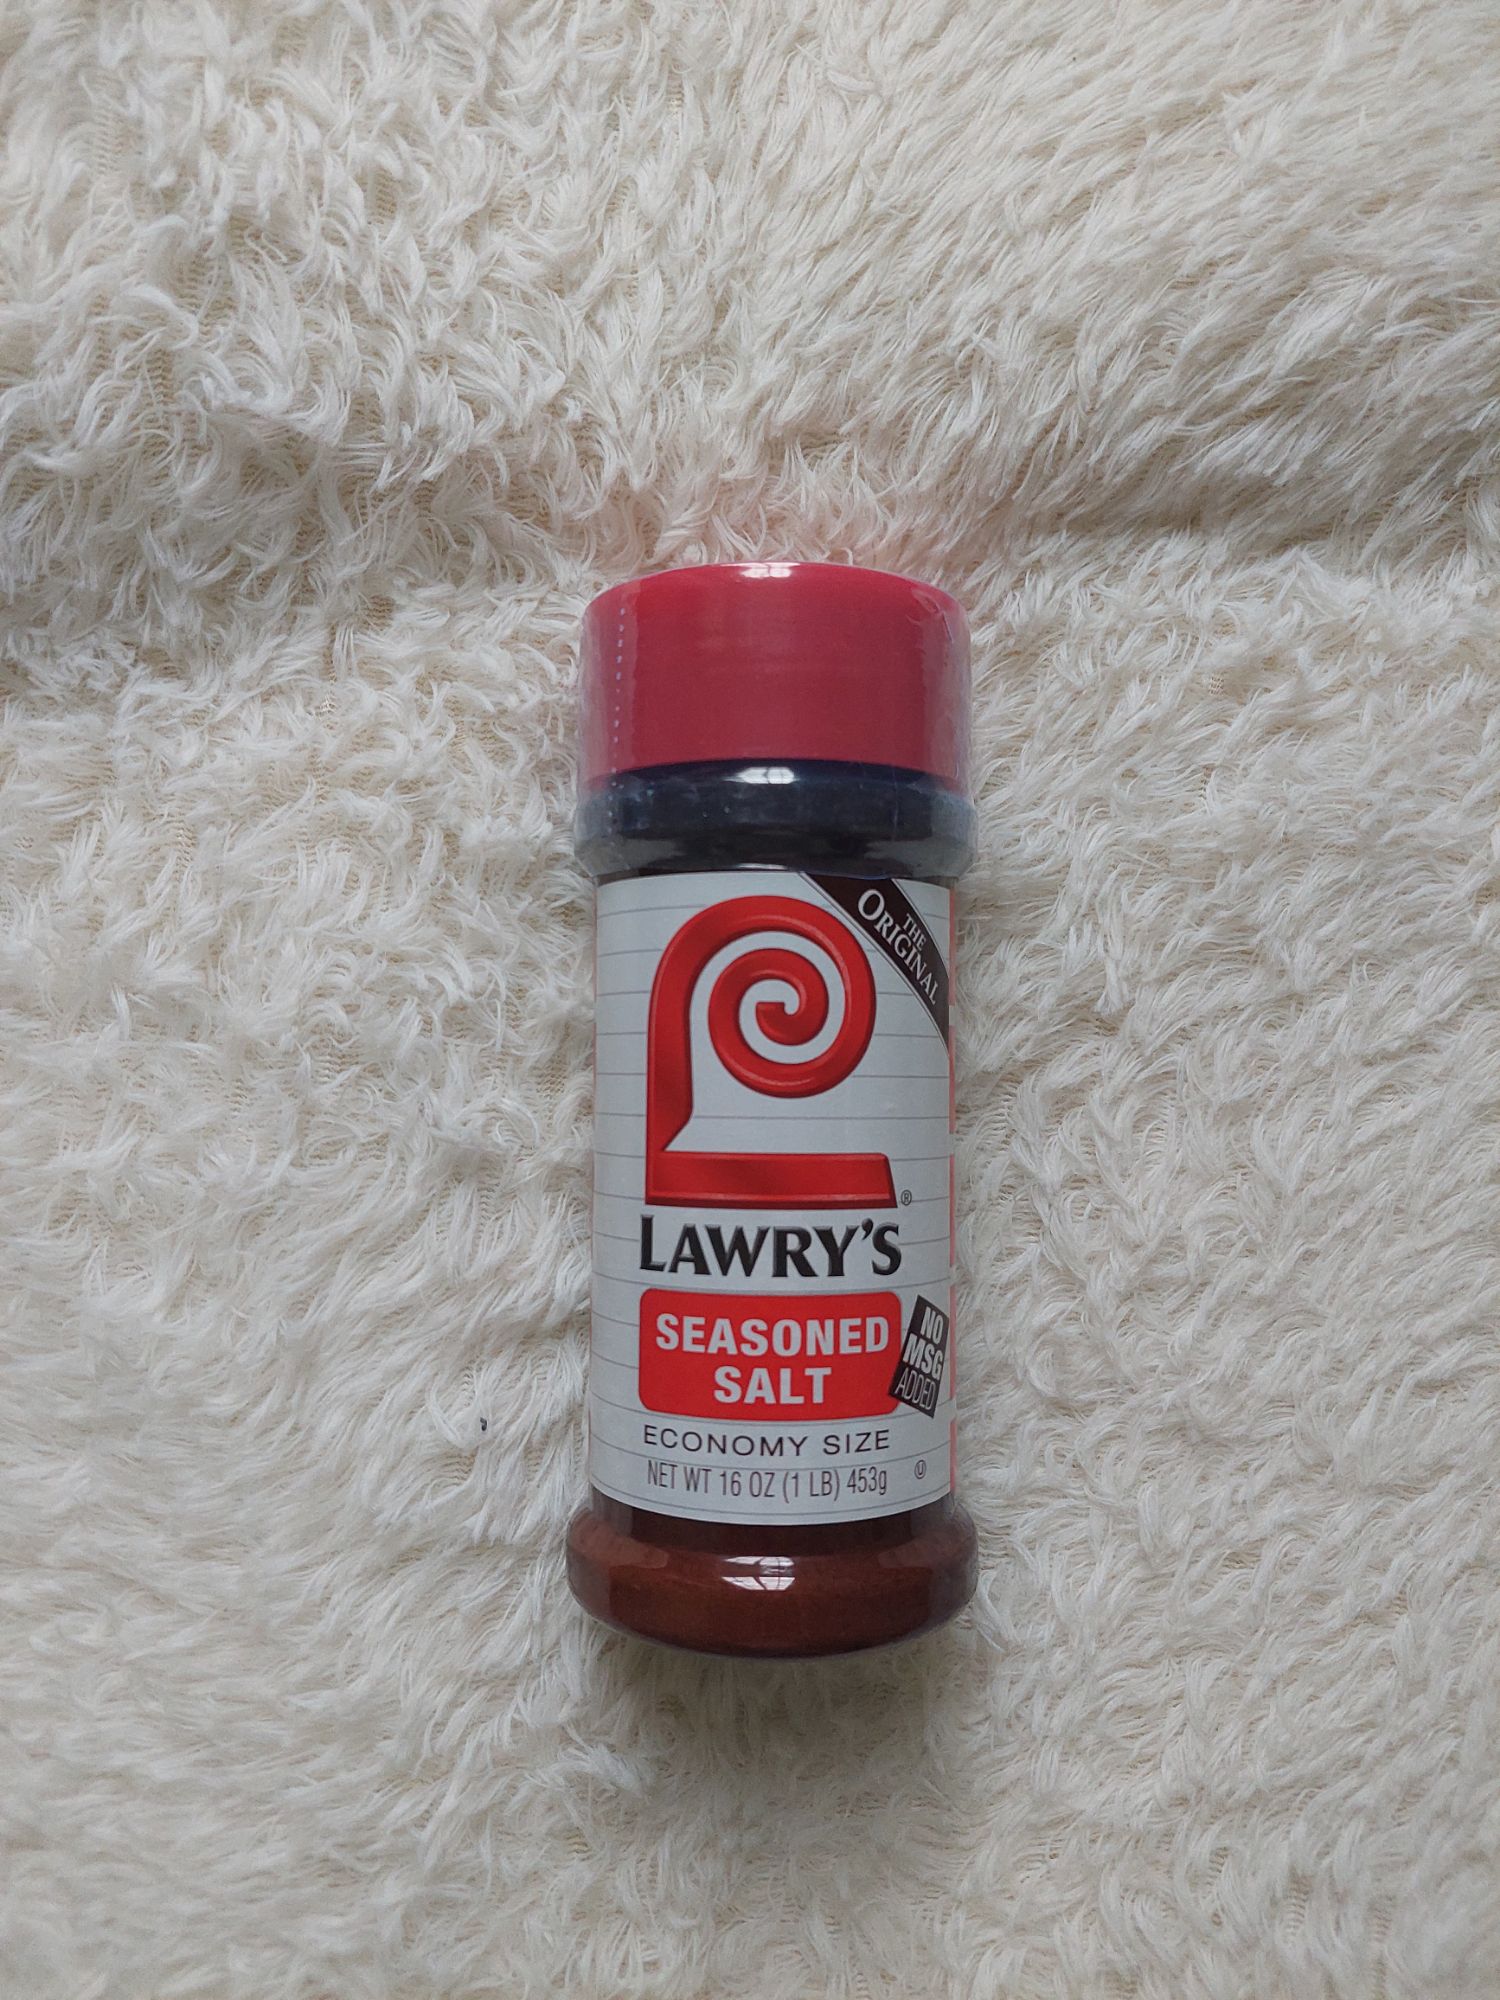 Lawry's Seasoned Salt, The Original, Economy Size - 16 oz